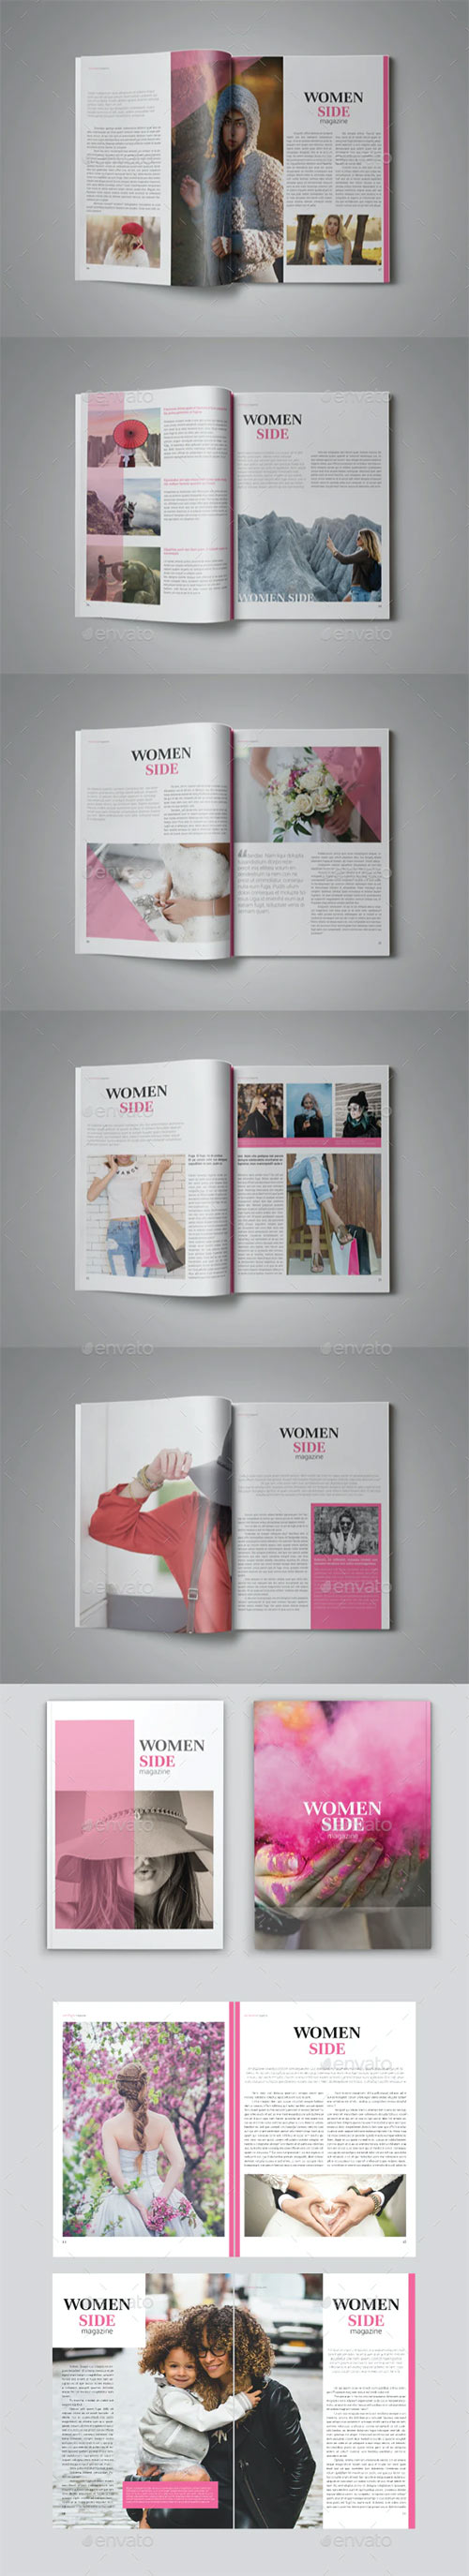 Women Side Magazine 20936839